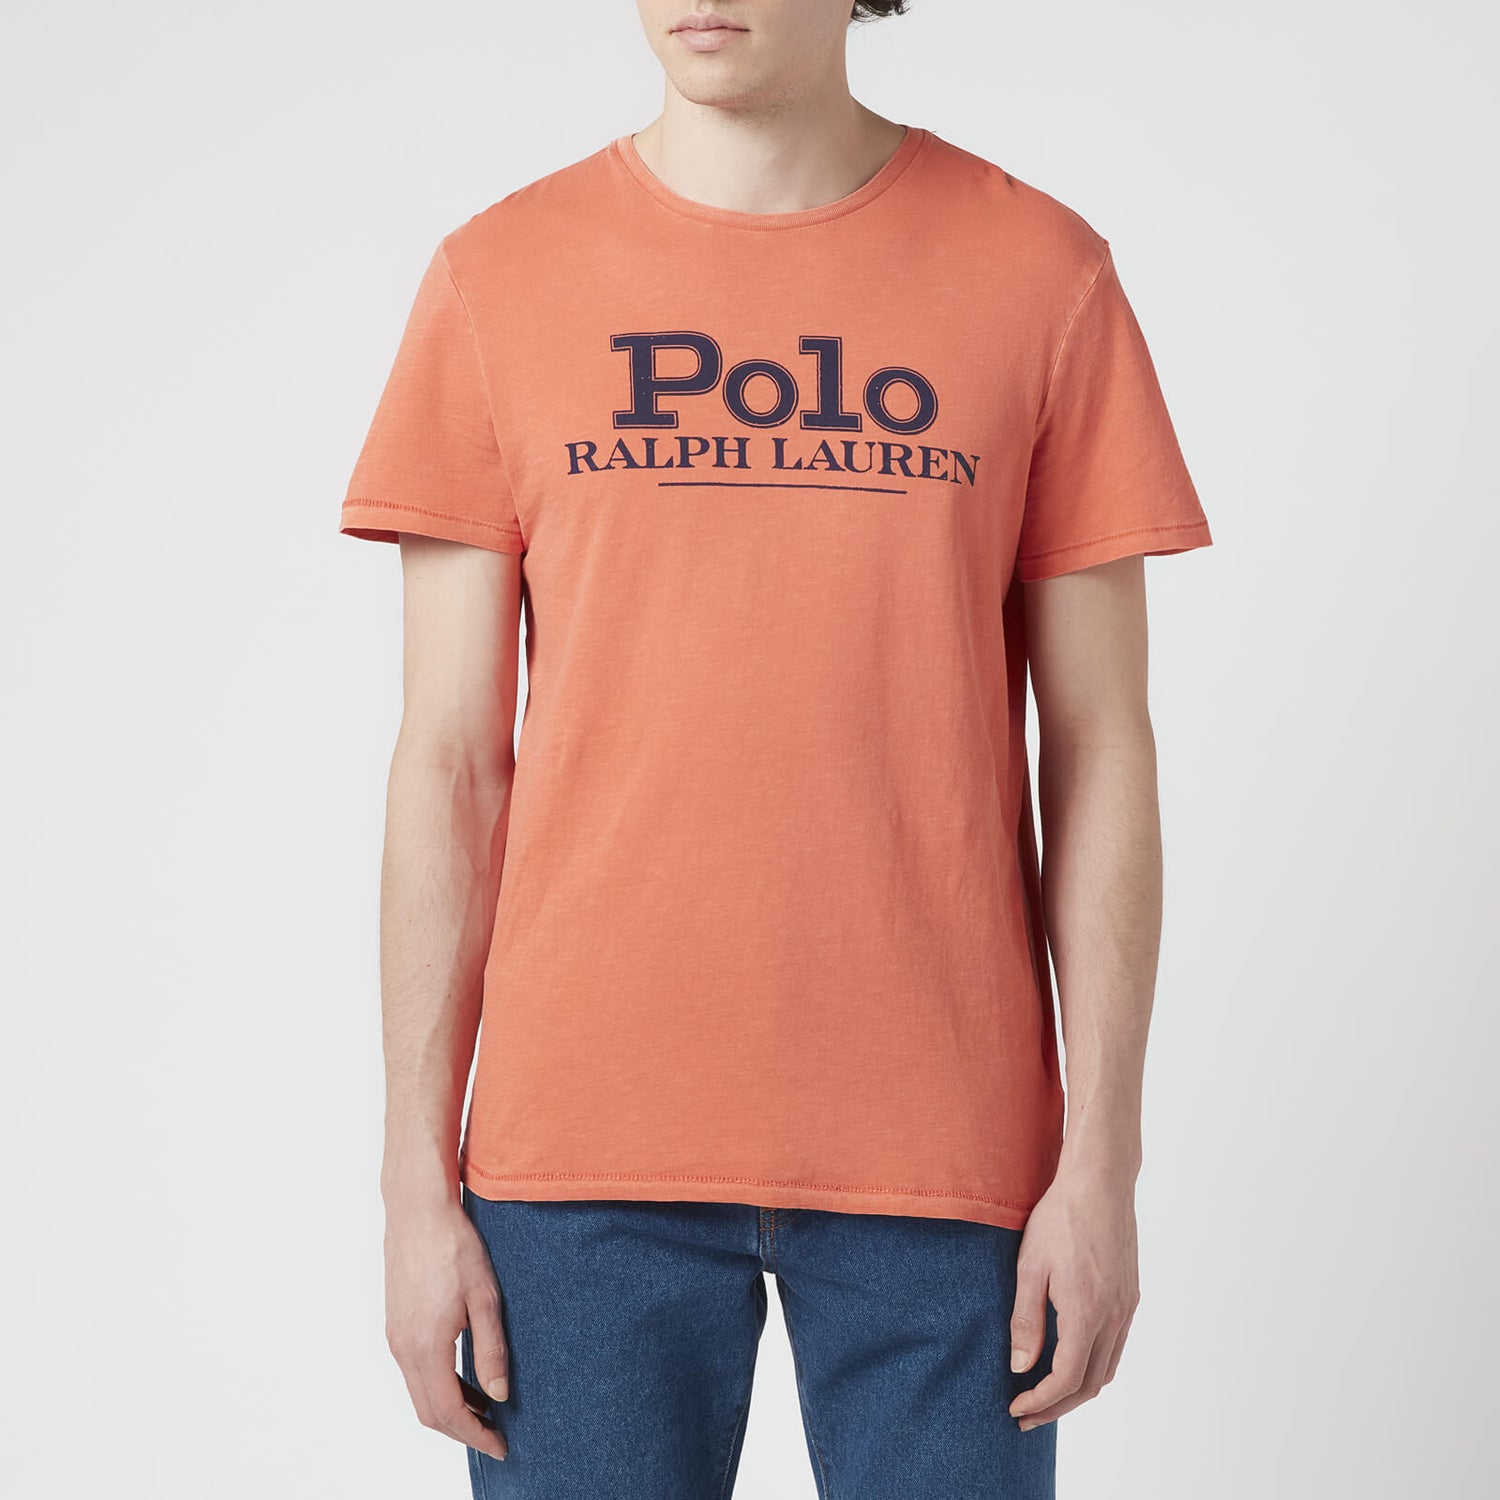 Polo Ralph Lauren Men's Polo Logo T-Shirt - College Orange - S